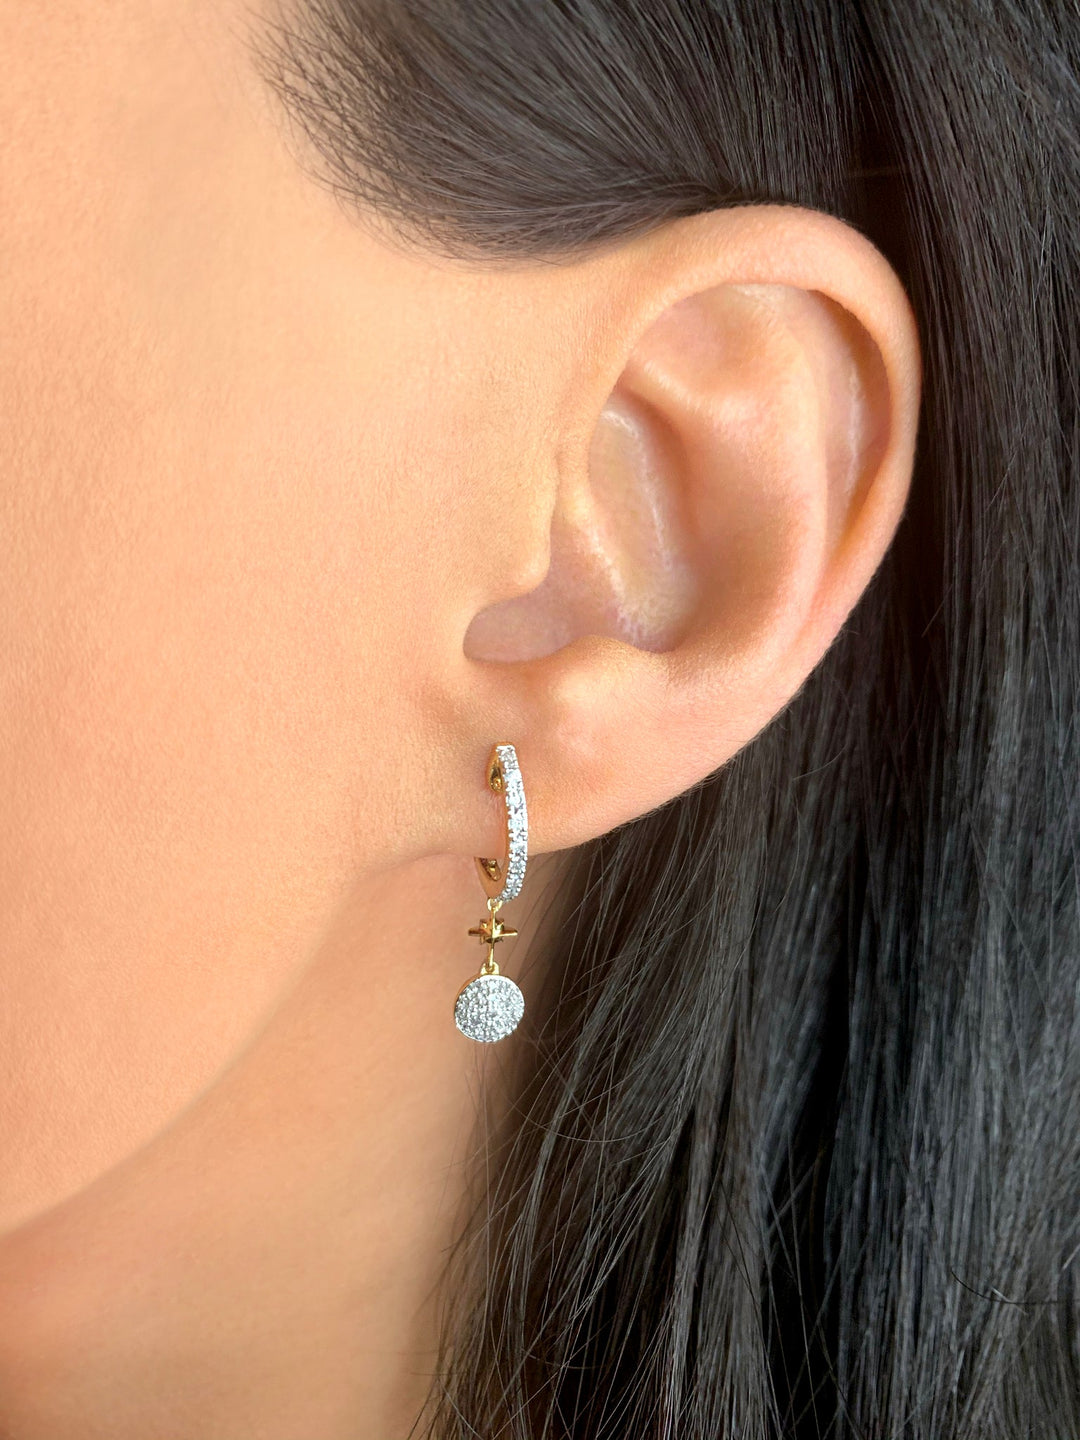 Full Moon Star Diamond Hoop Earrings in 14K Yellow Gold Vermeil on Sterling Silver